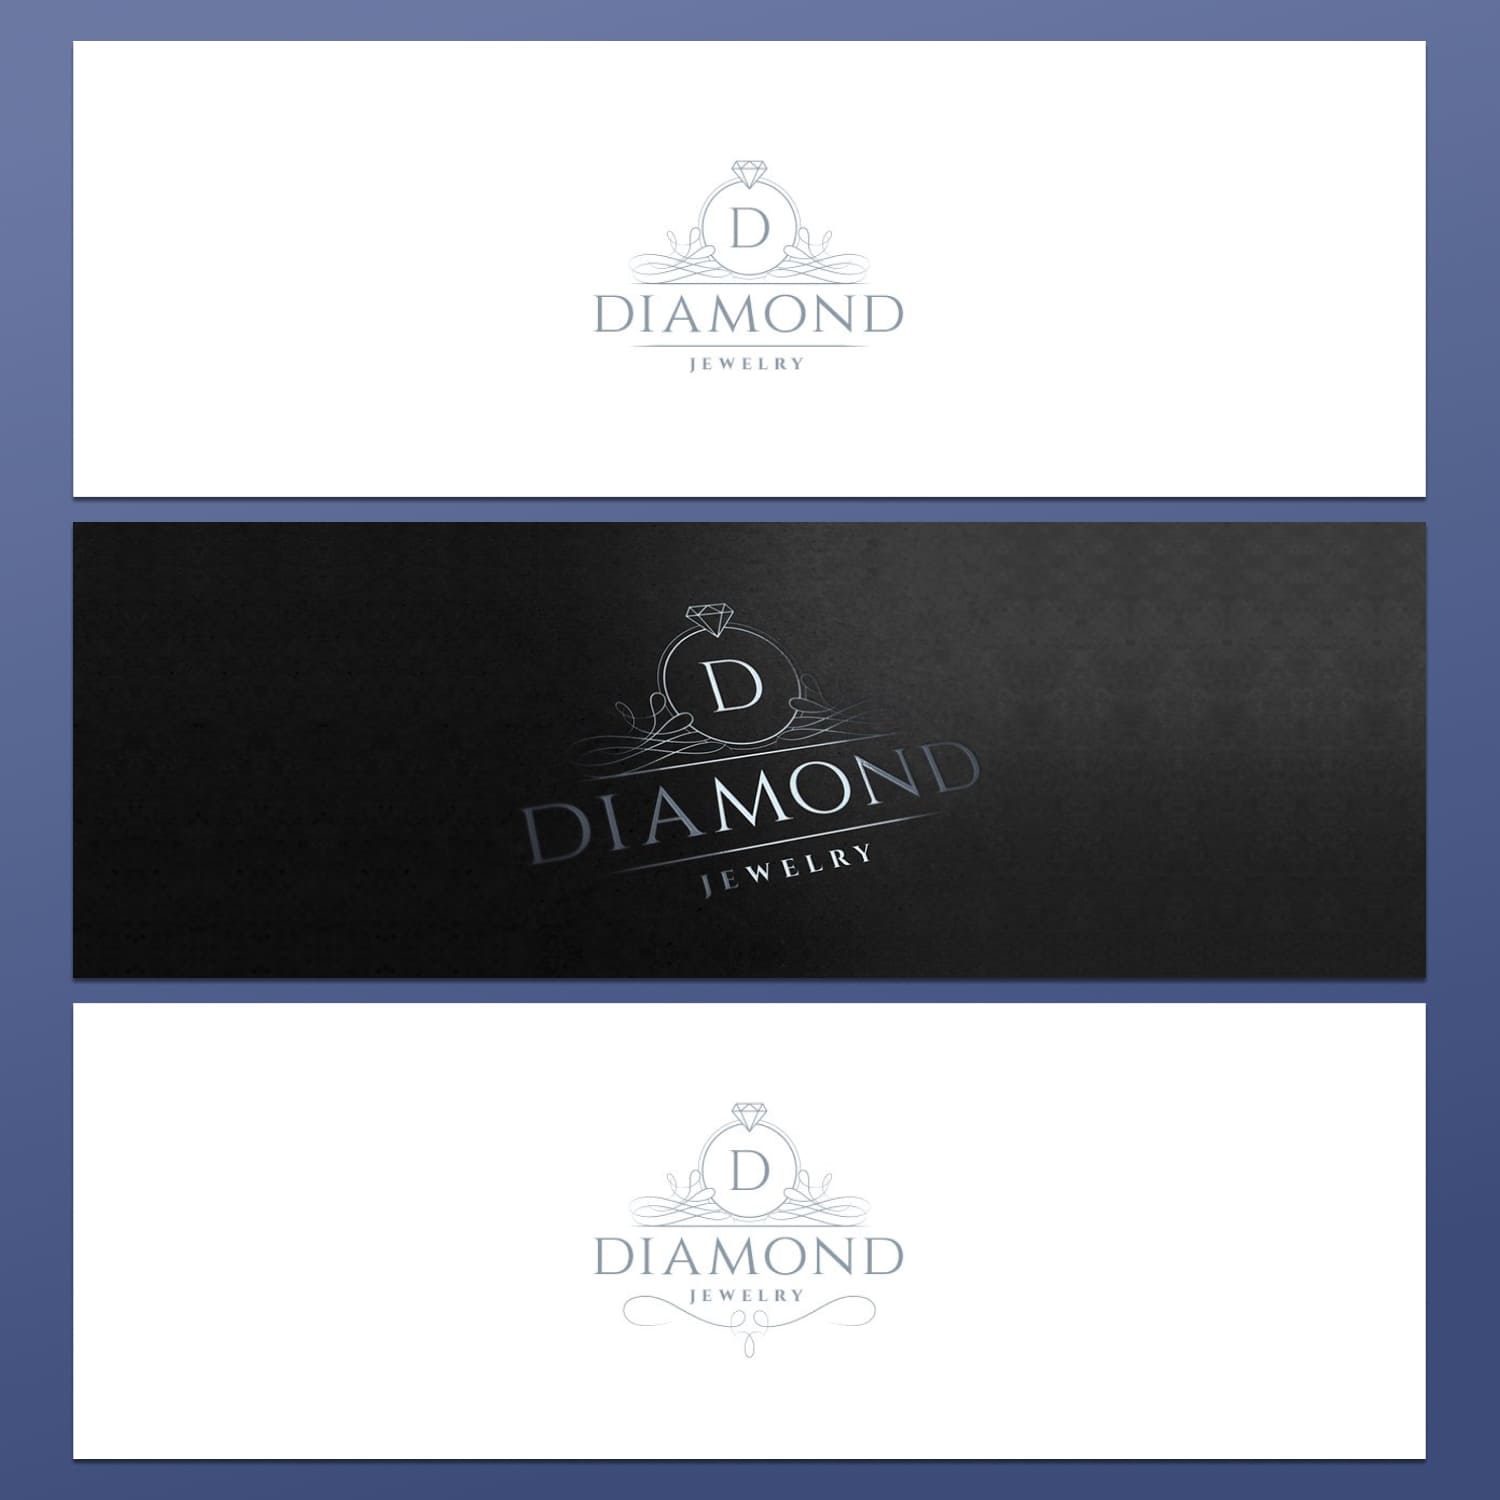 Diamond Jewelry Logo Design preview image.